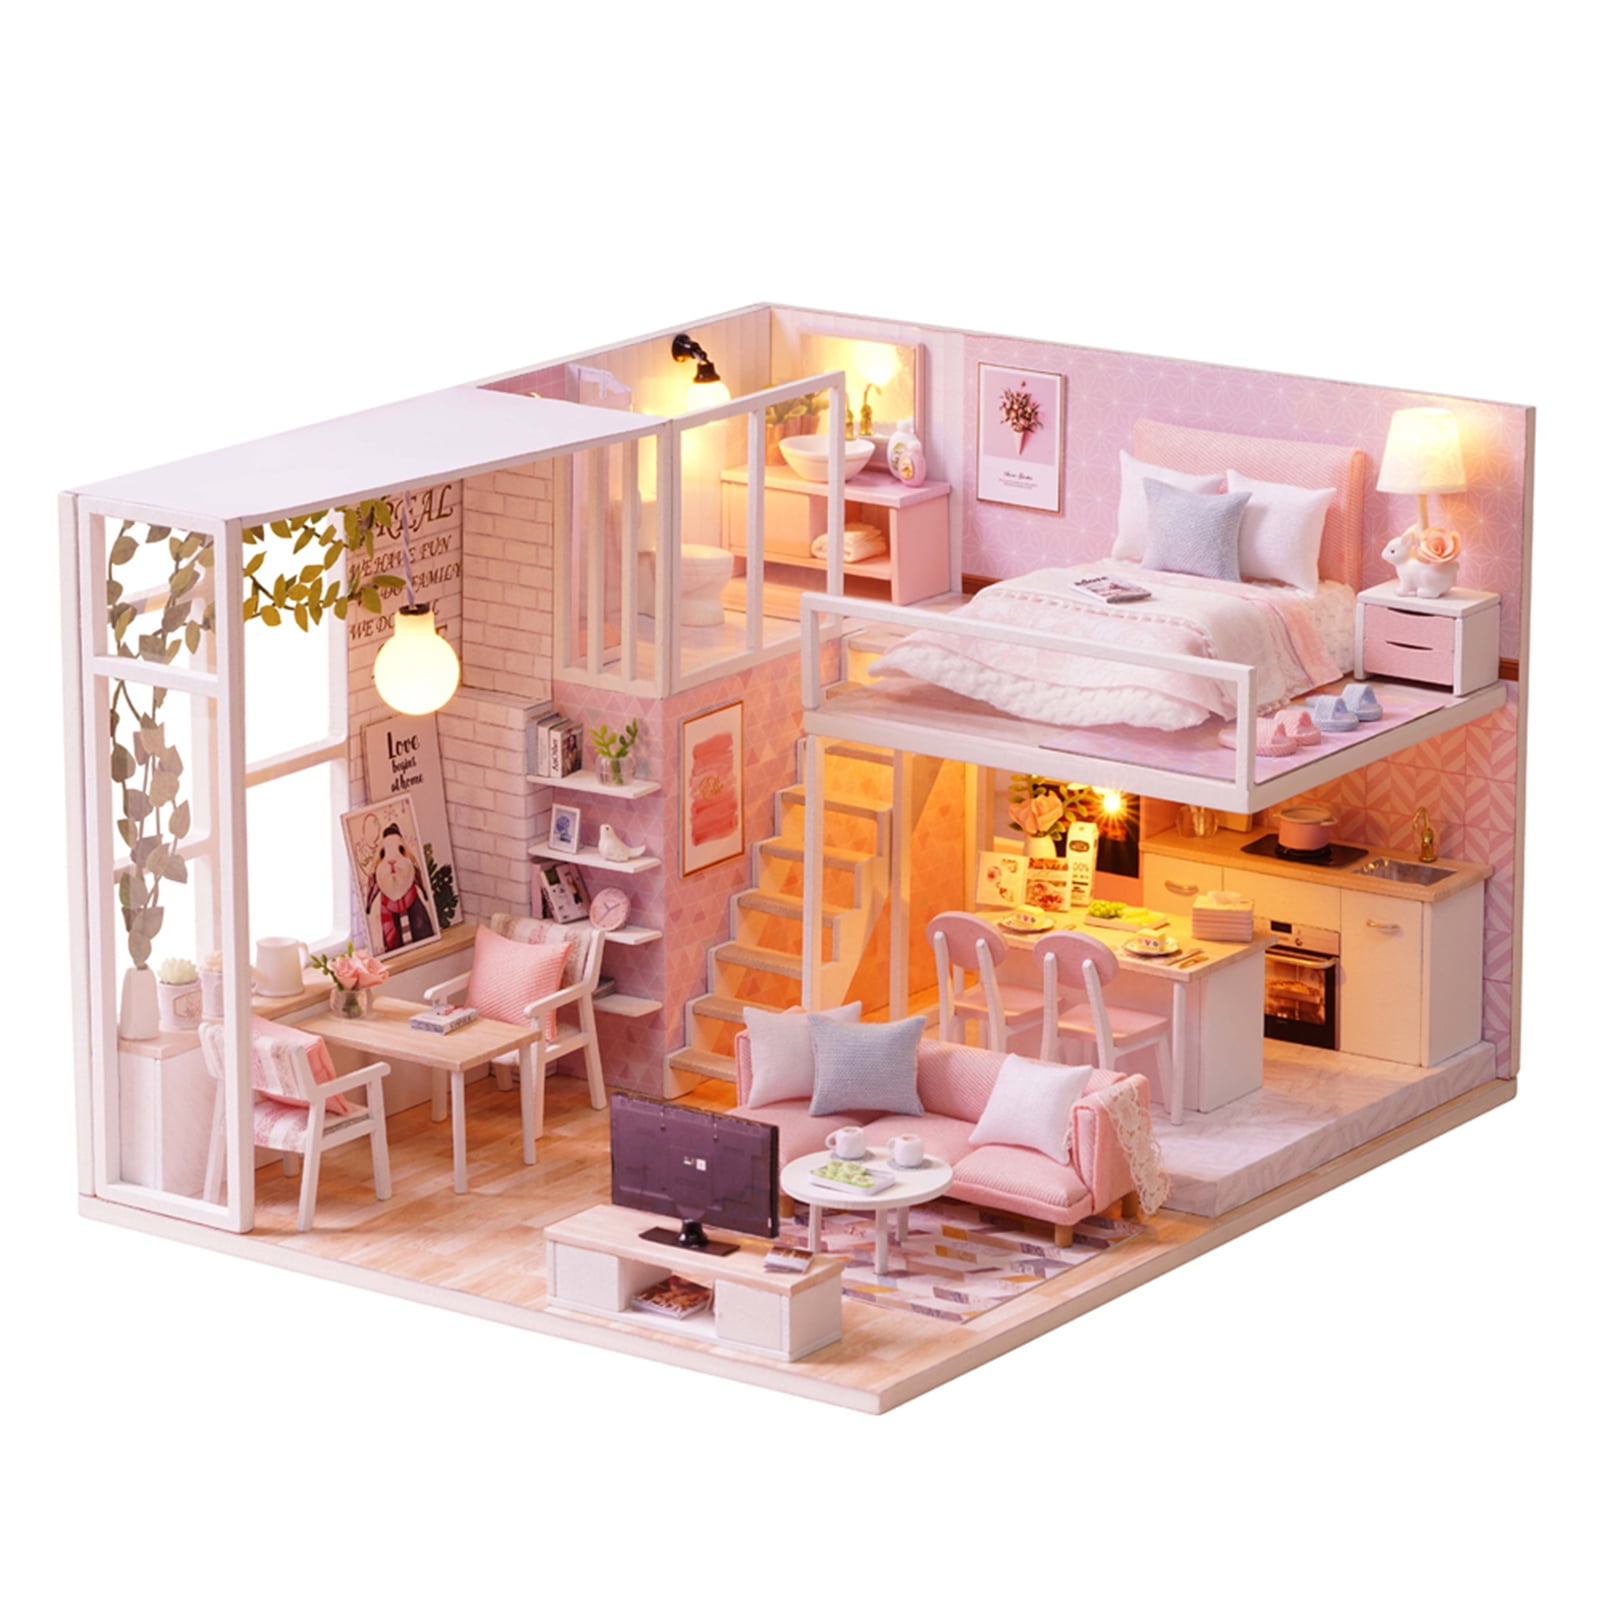 2 Set DIY Handcraft Miniature Project Kit Wooden Dolls House LED A B Room 